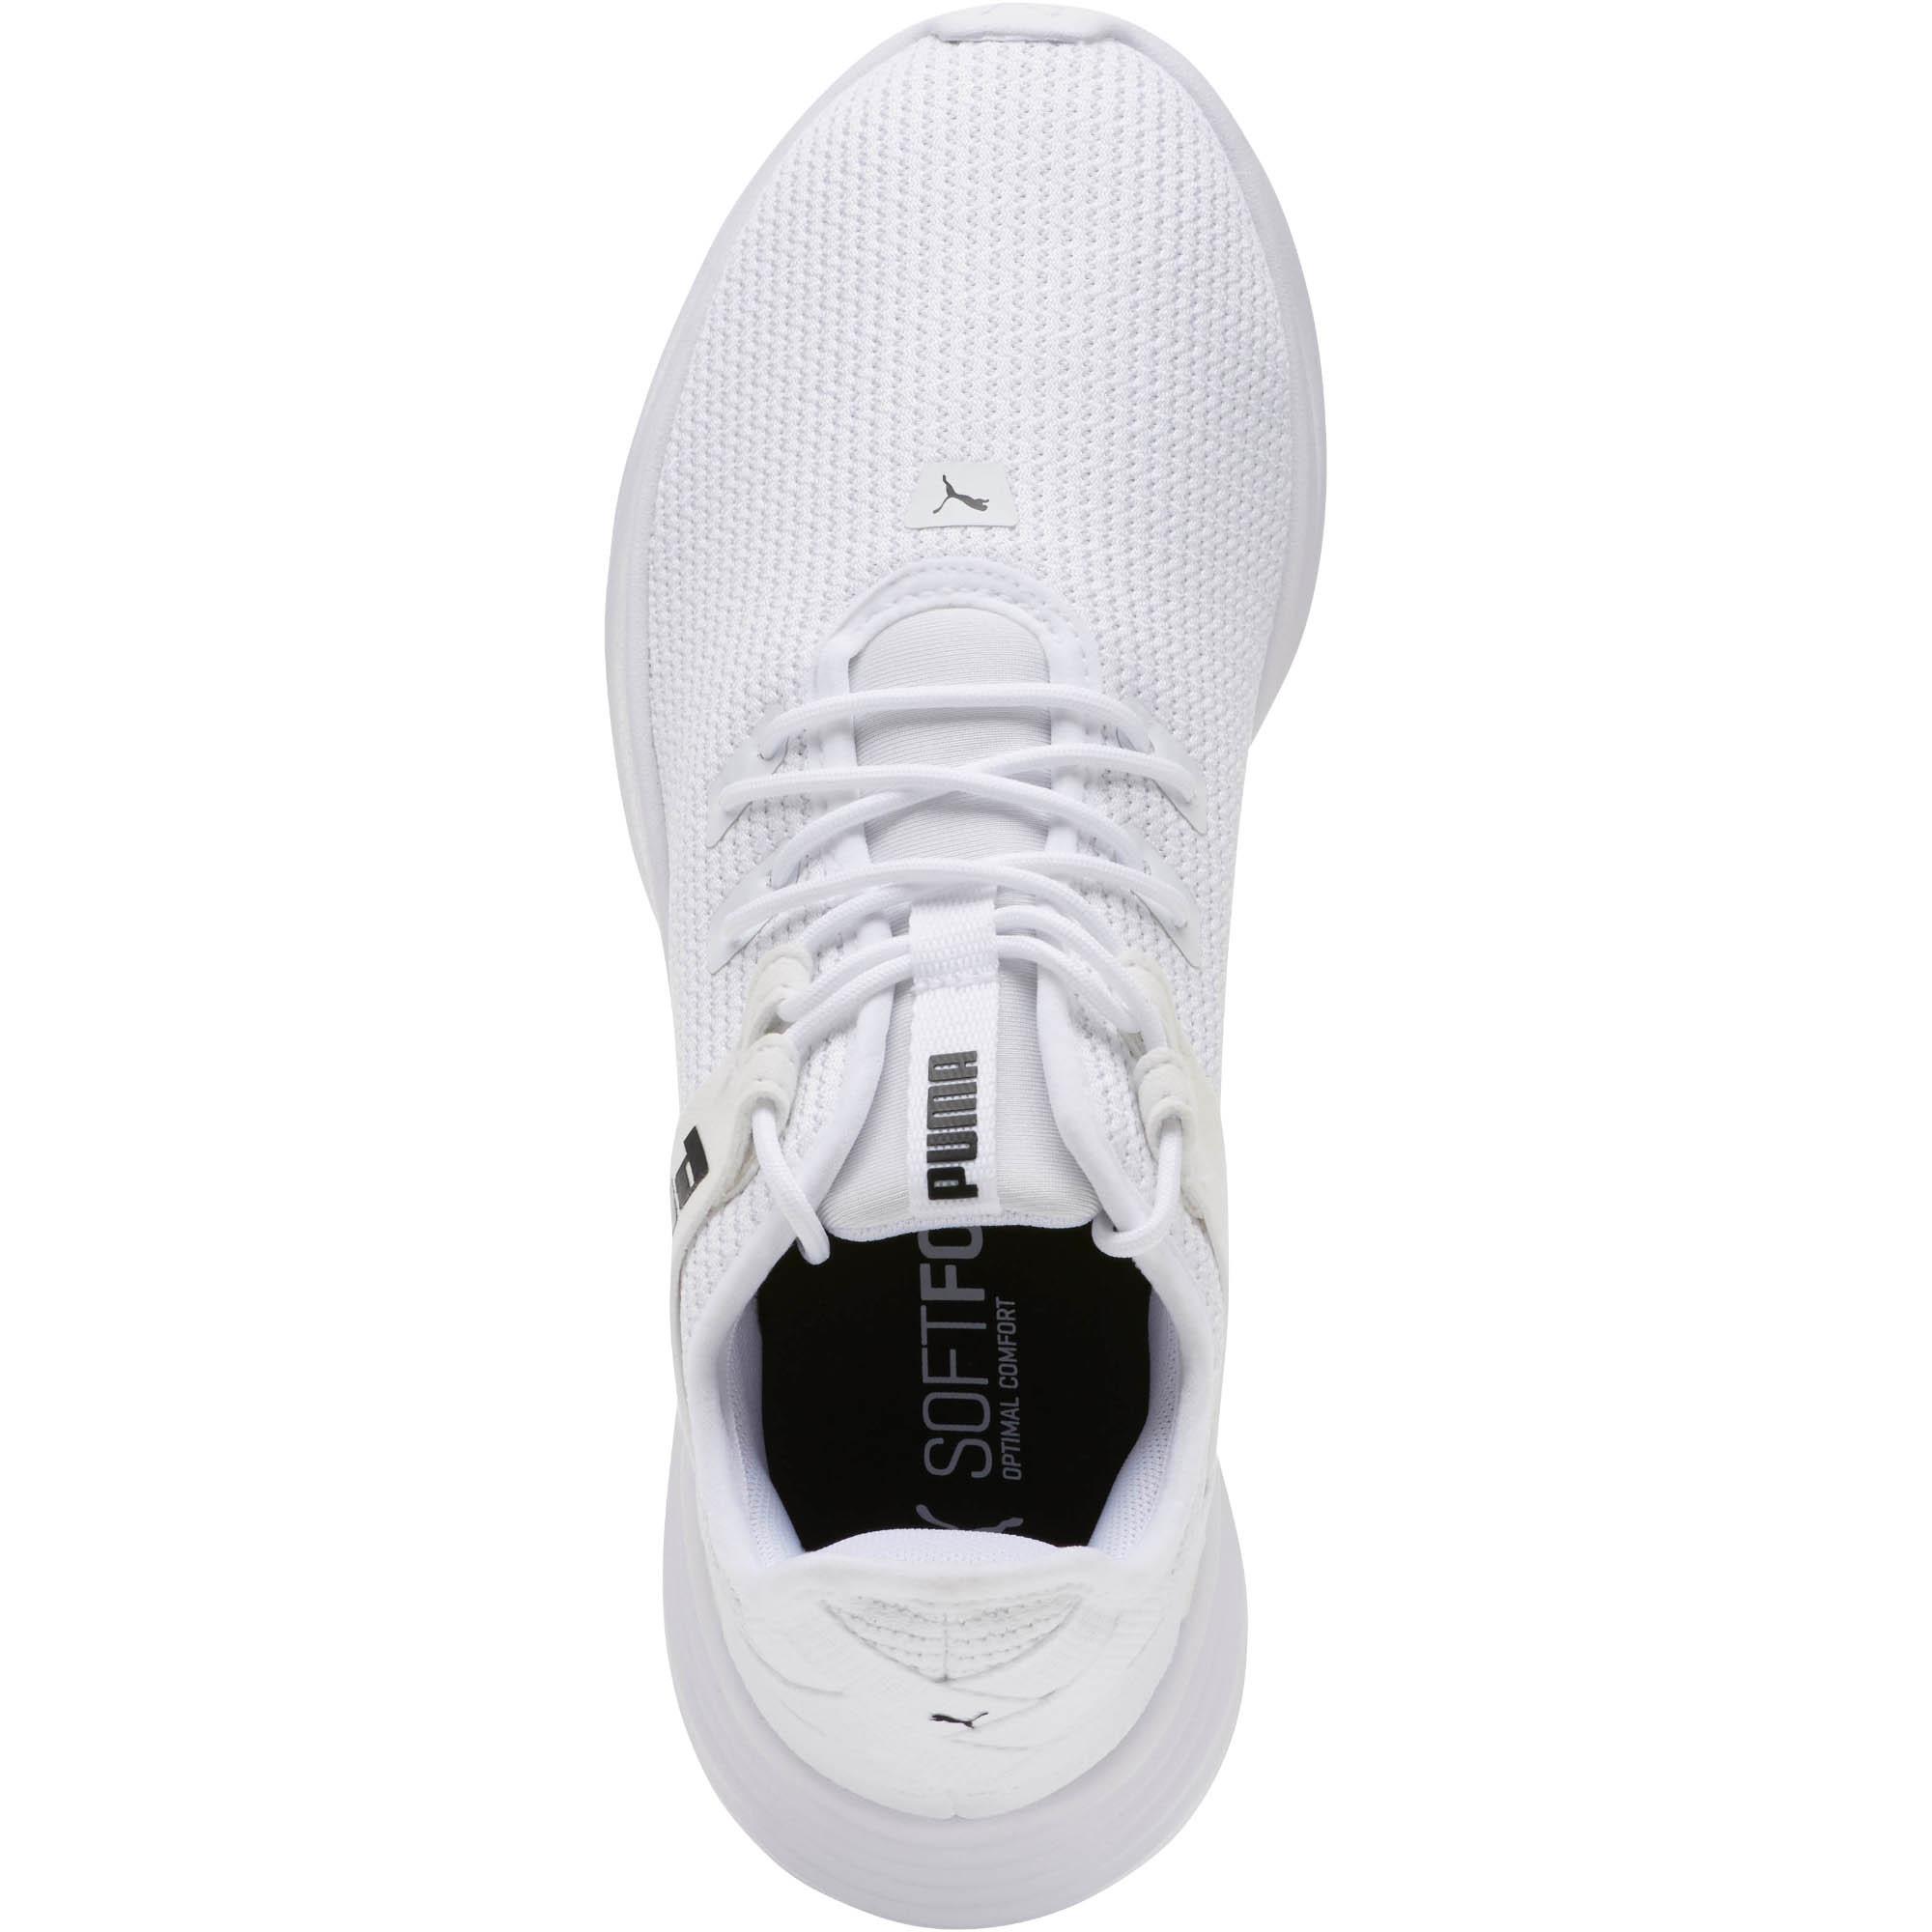 PUMA Radiate Xt Women's Training Shoes in White - Lyst